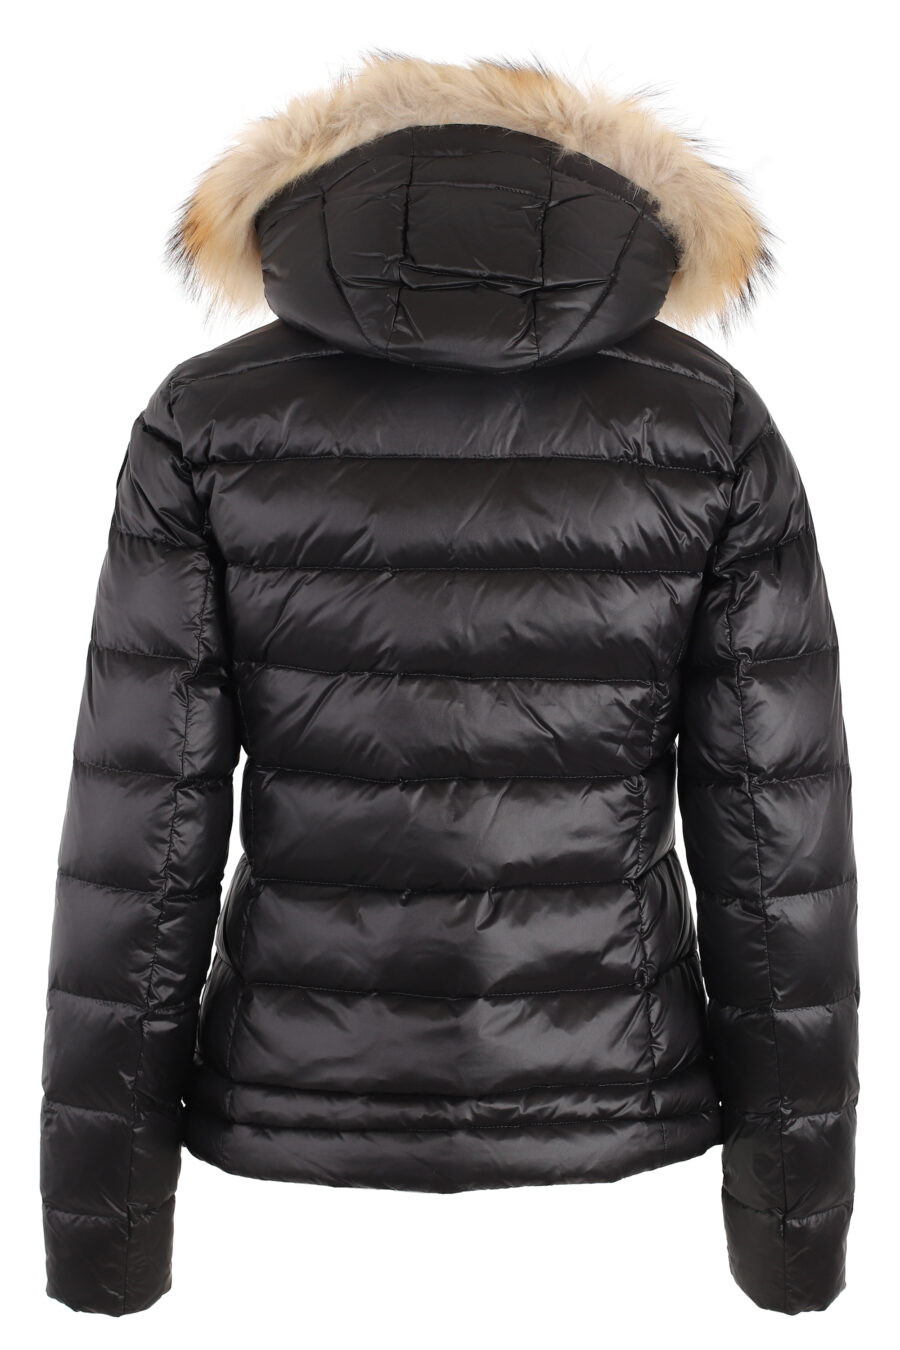 Black fur hooded jacket with reddish-brown interior - IMG 4933